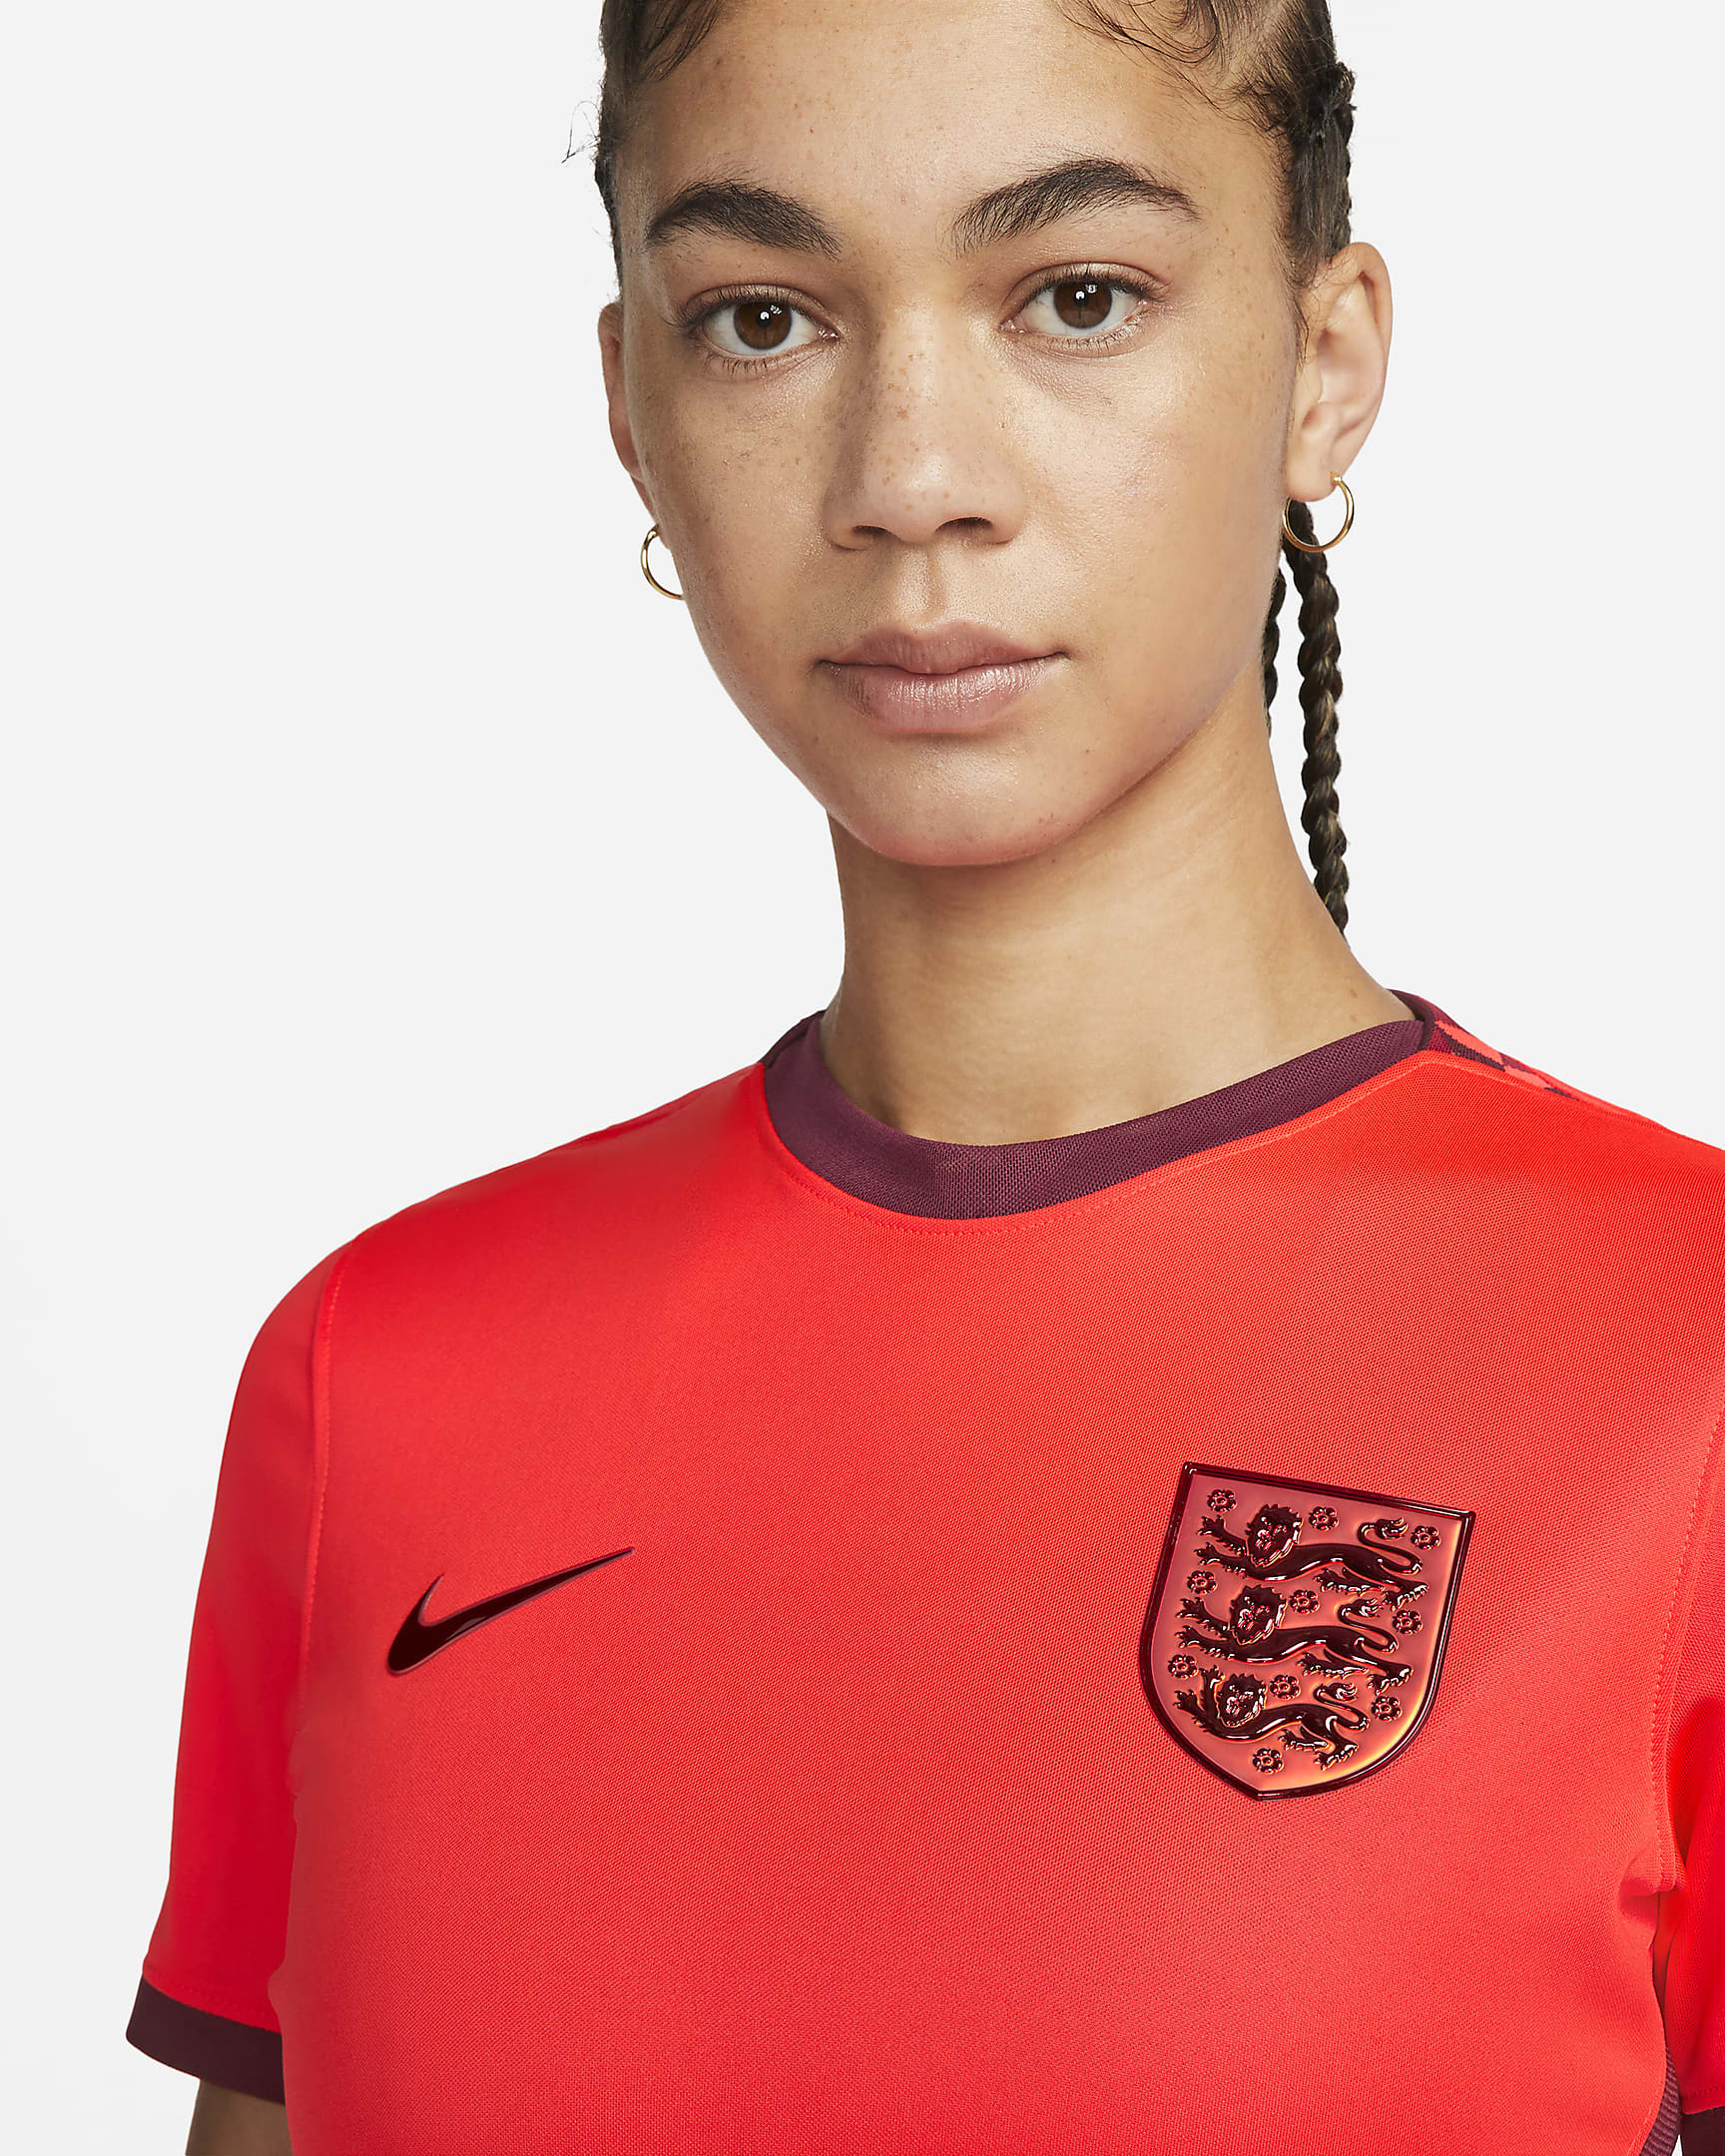 England 2022 Stadium Away Women's Nike Dri-FIT Soccer Jersey. Nike.com